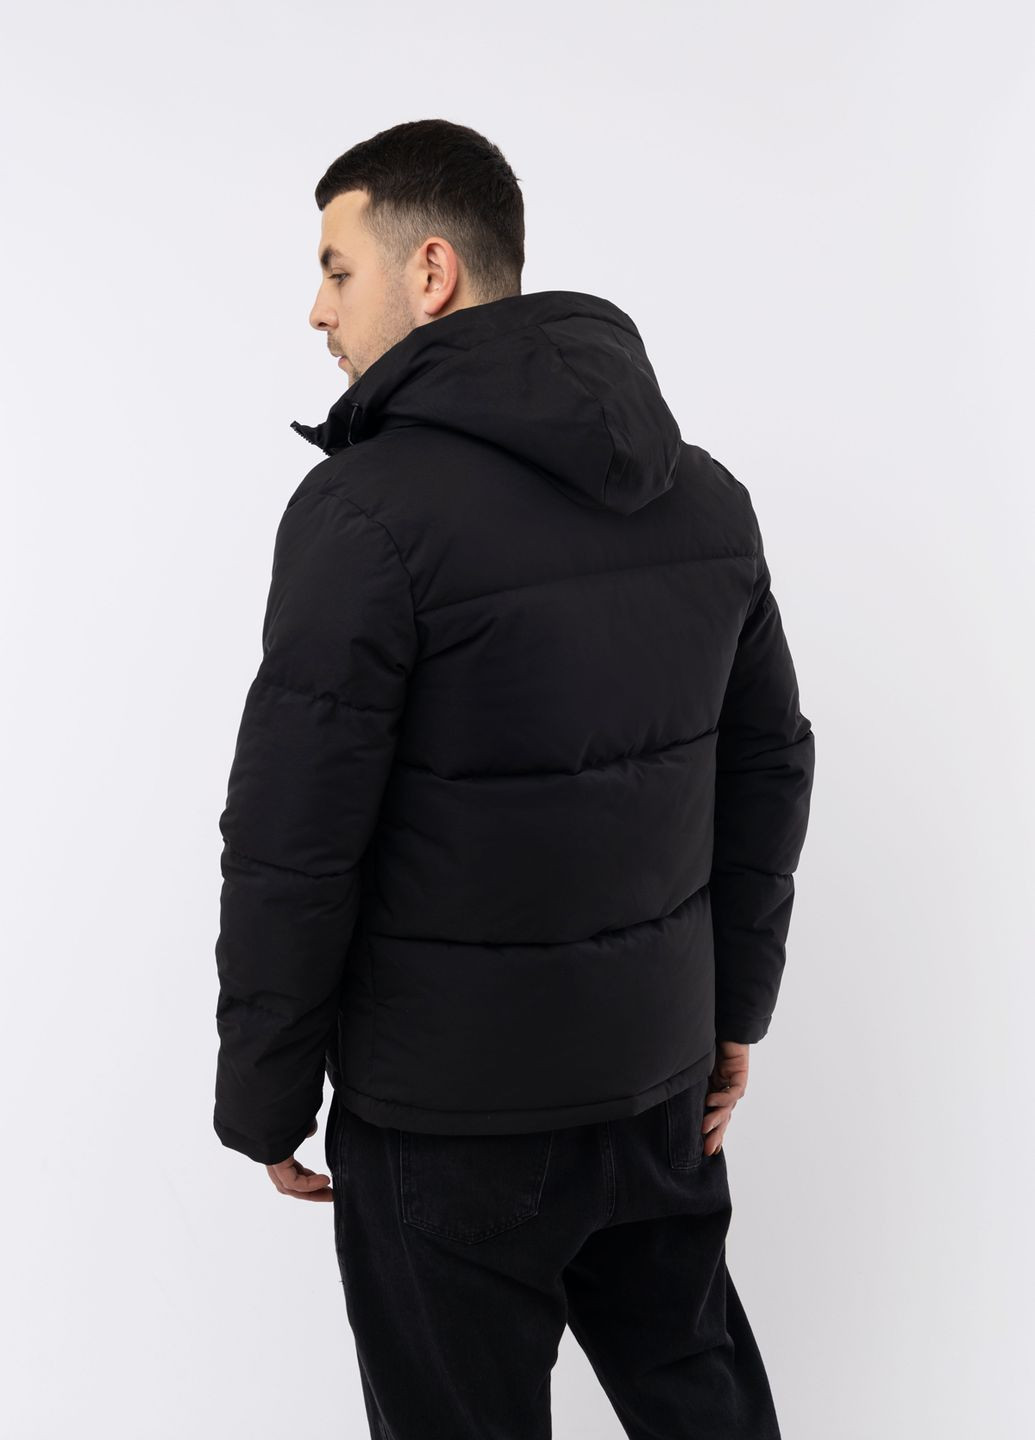 Черная зимняя мужская куртка цвет черный цб-00220285 Remain